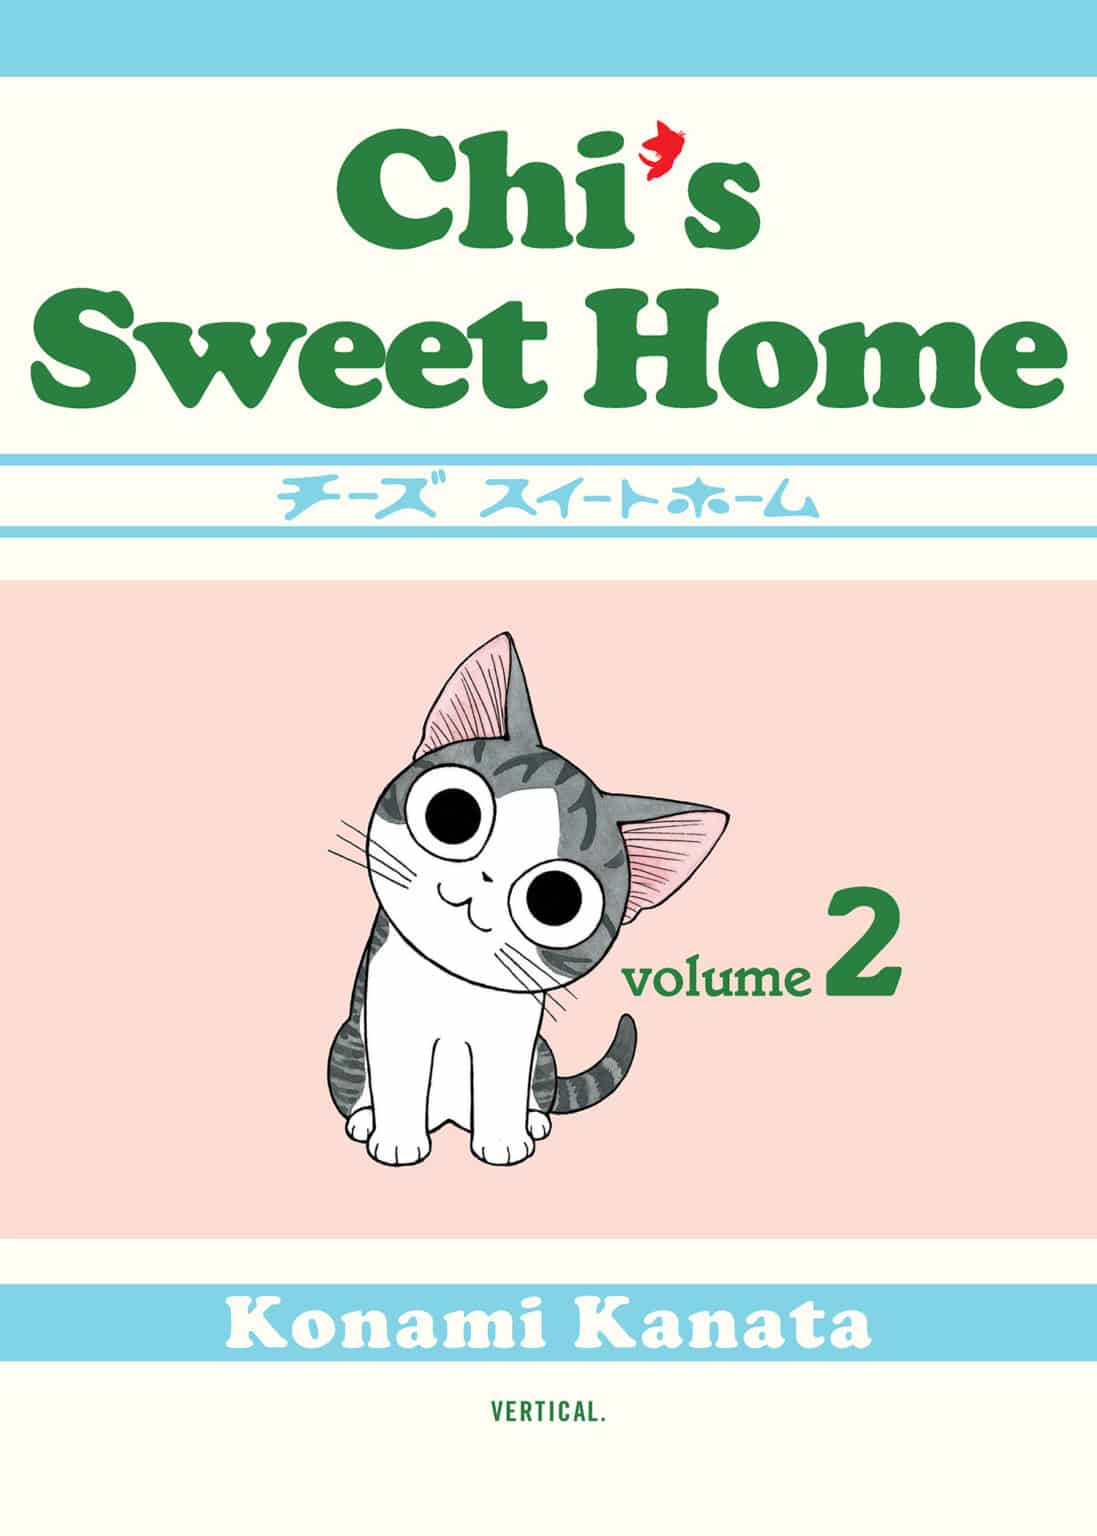 Chi's Sweet Home vol 2 by Konami Kanata